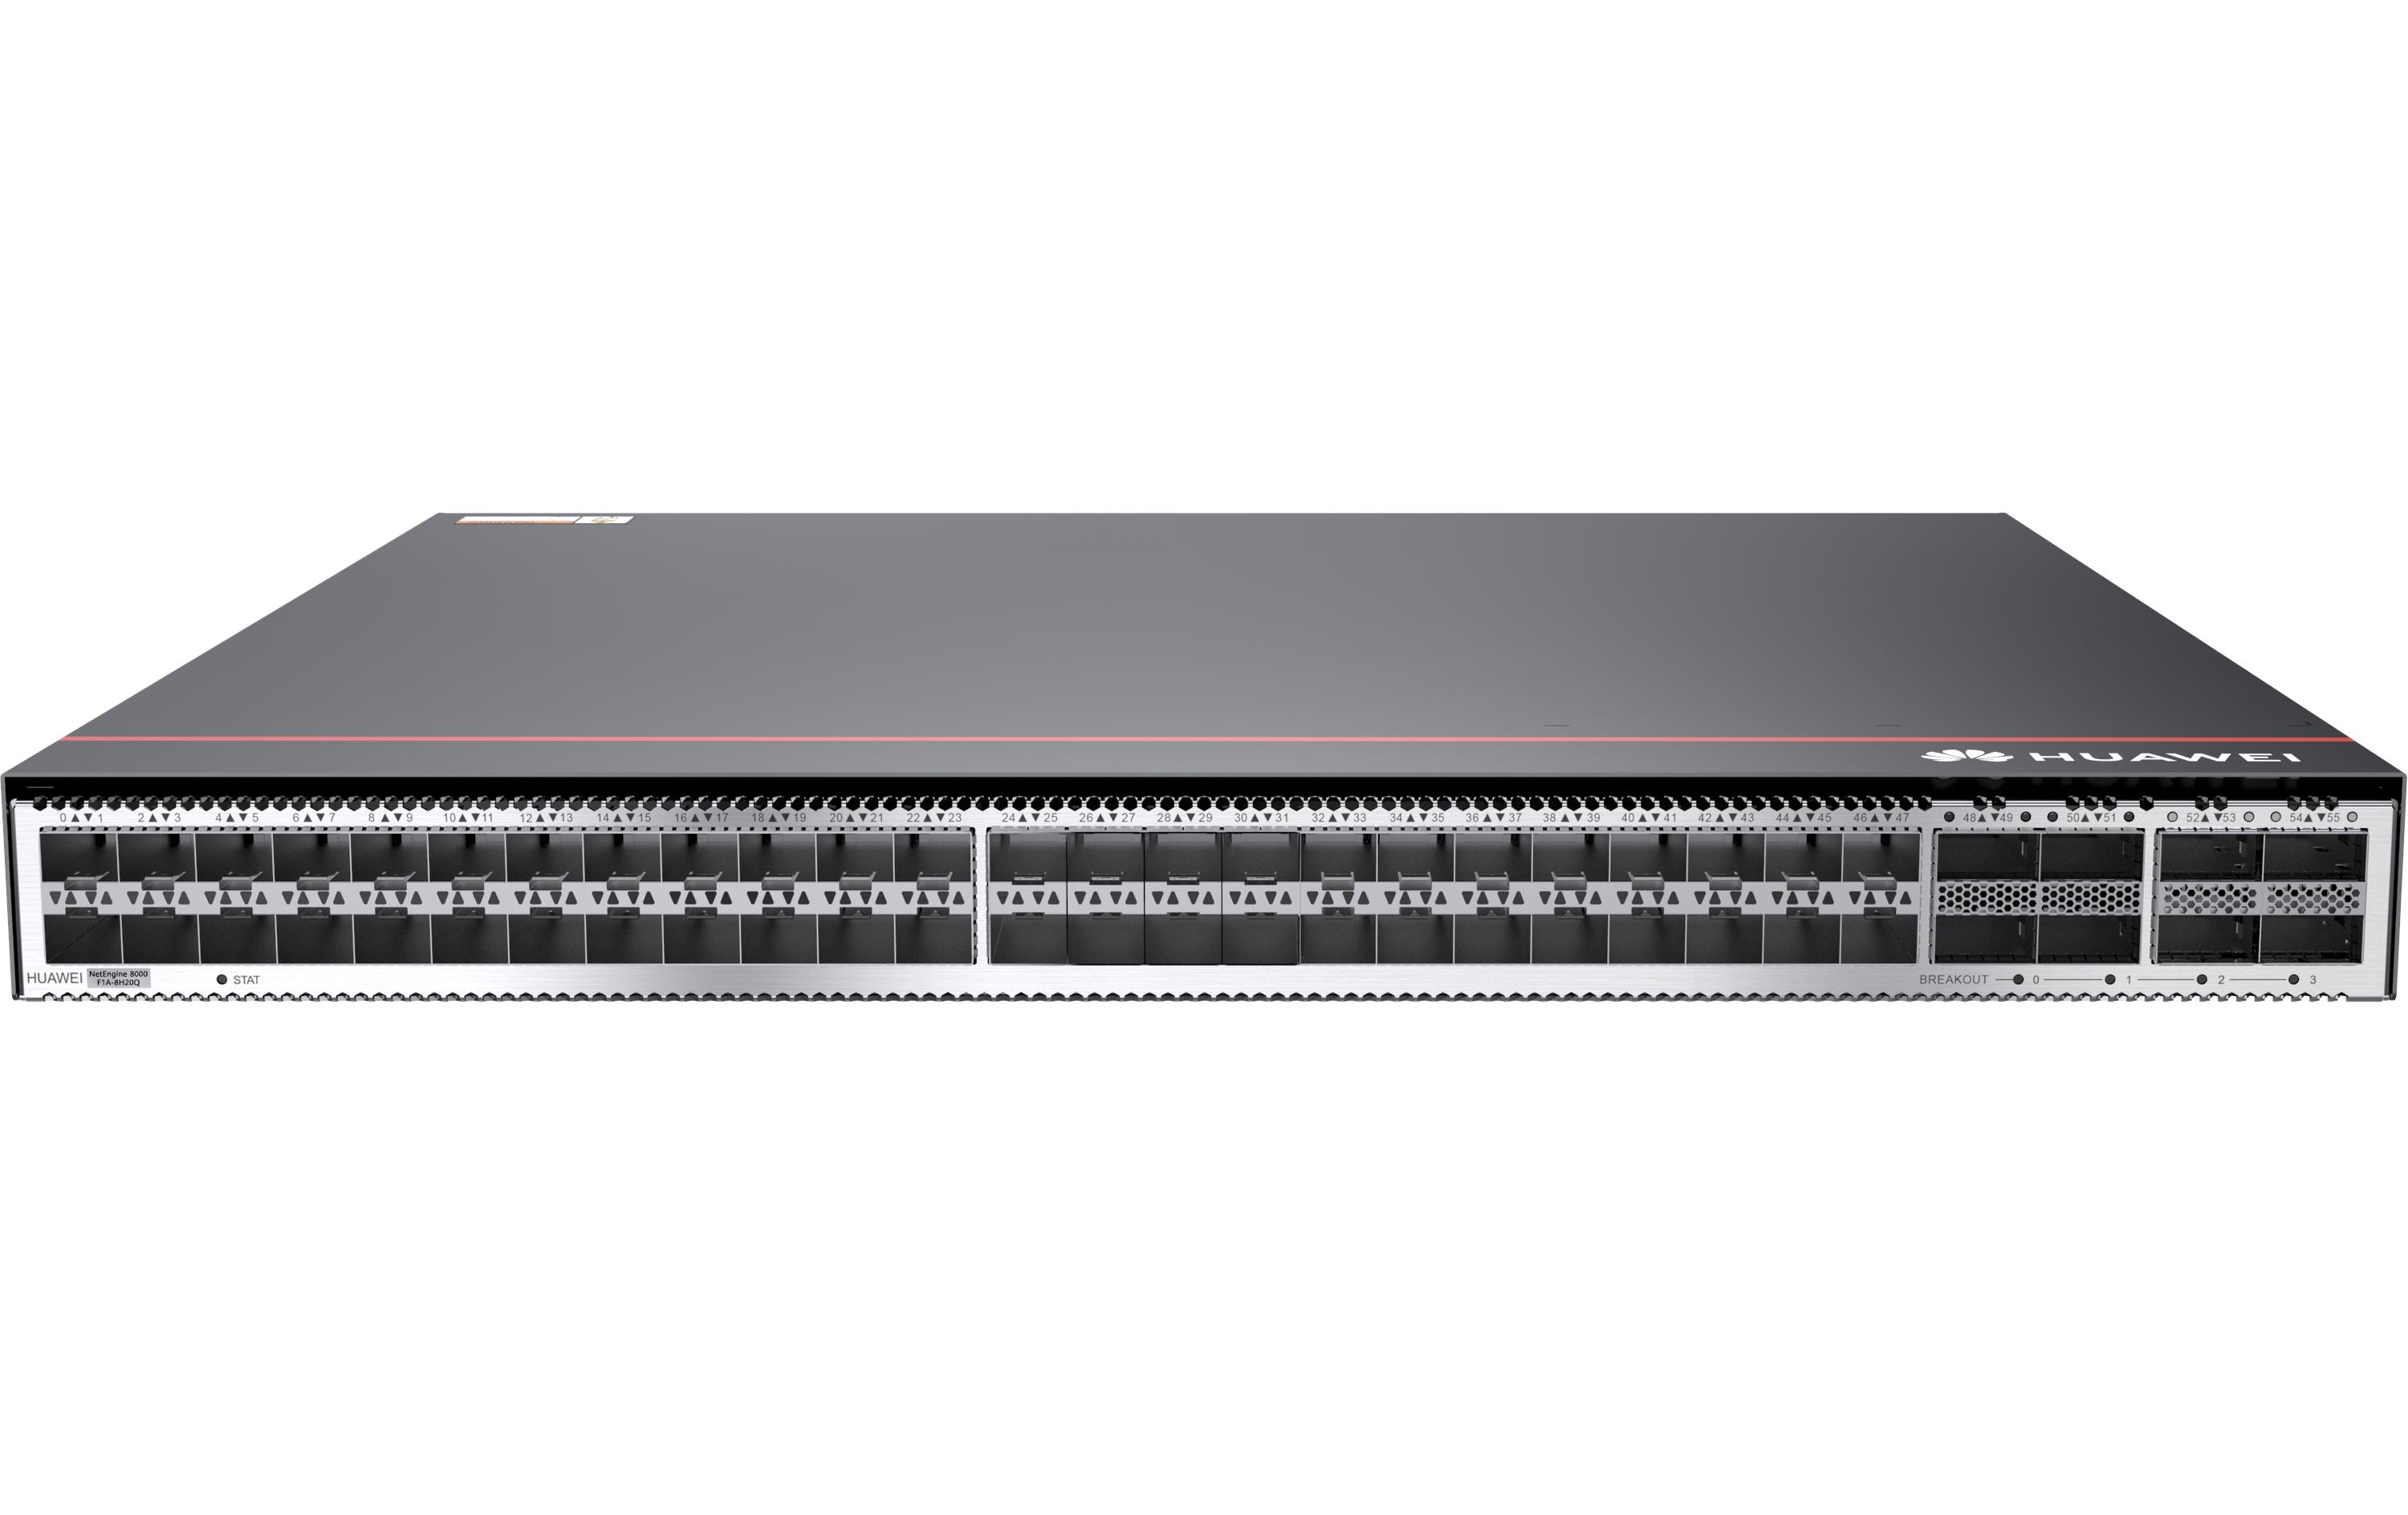 Huawei SFP+ Switch NetEngine 8000 F1A-8H20Q(Port-side) 56 Port